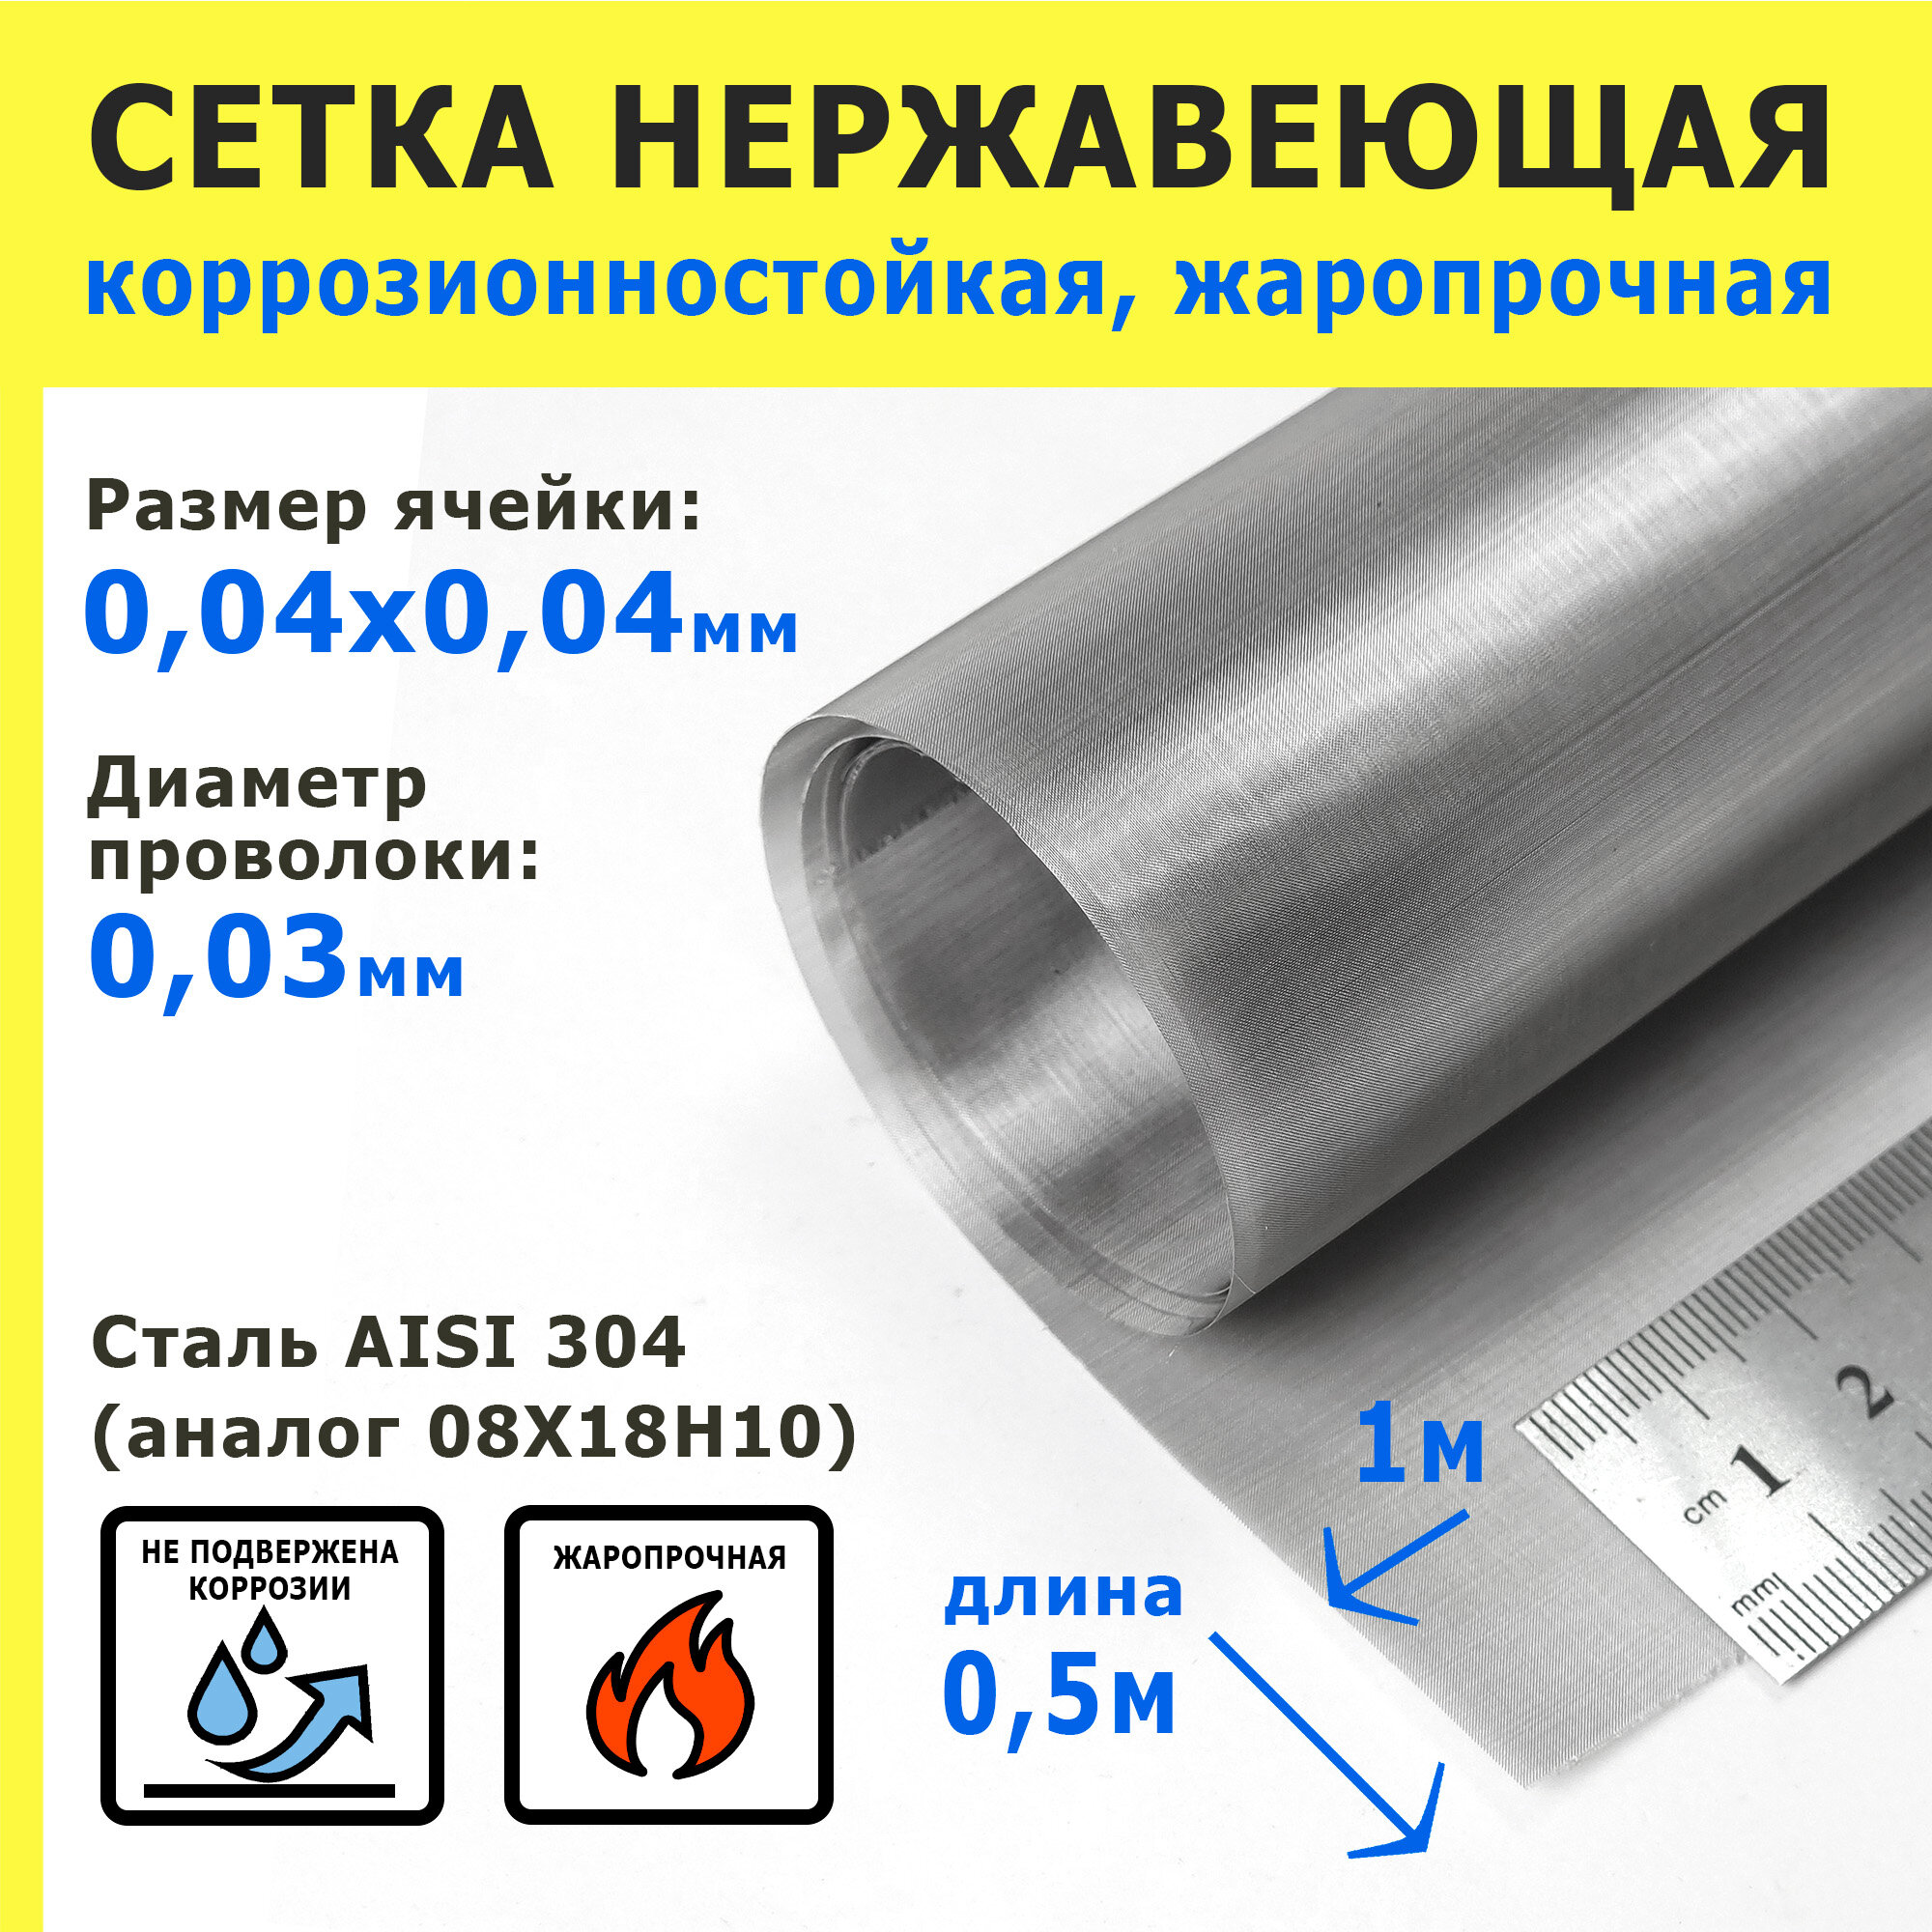 Сетка нержавеющая 0,04х0,04х0,03 мм для фильтрации, очистки. Cталь AISI 304 (08Х18Н10). Размер 1х0,5 метр.